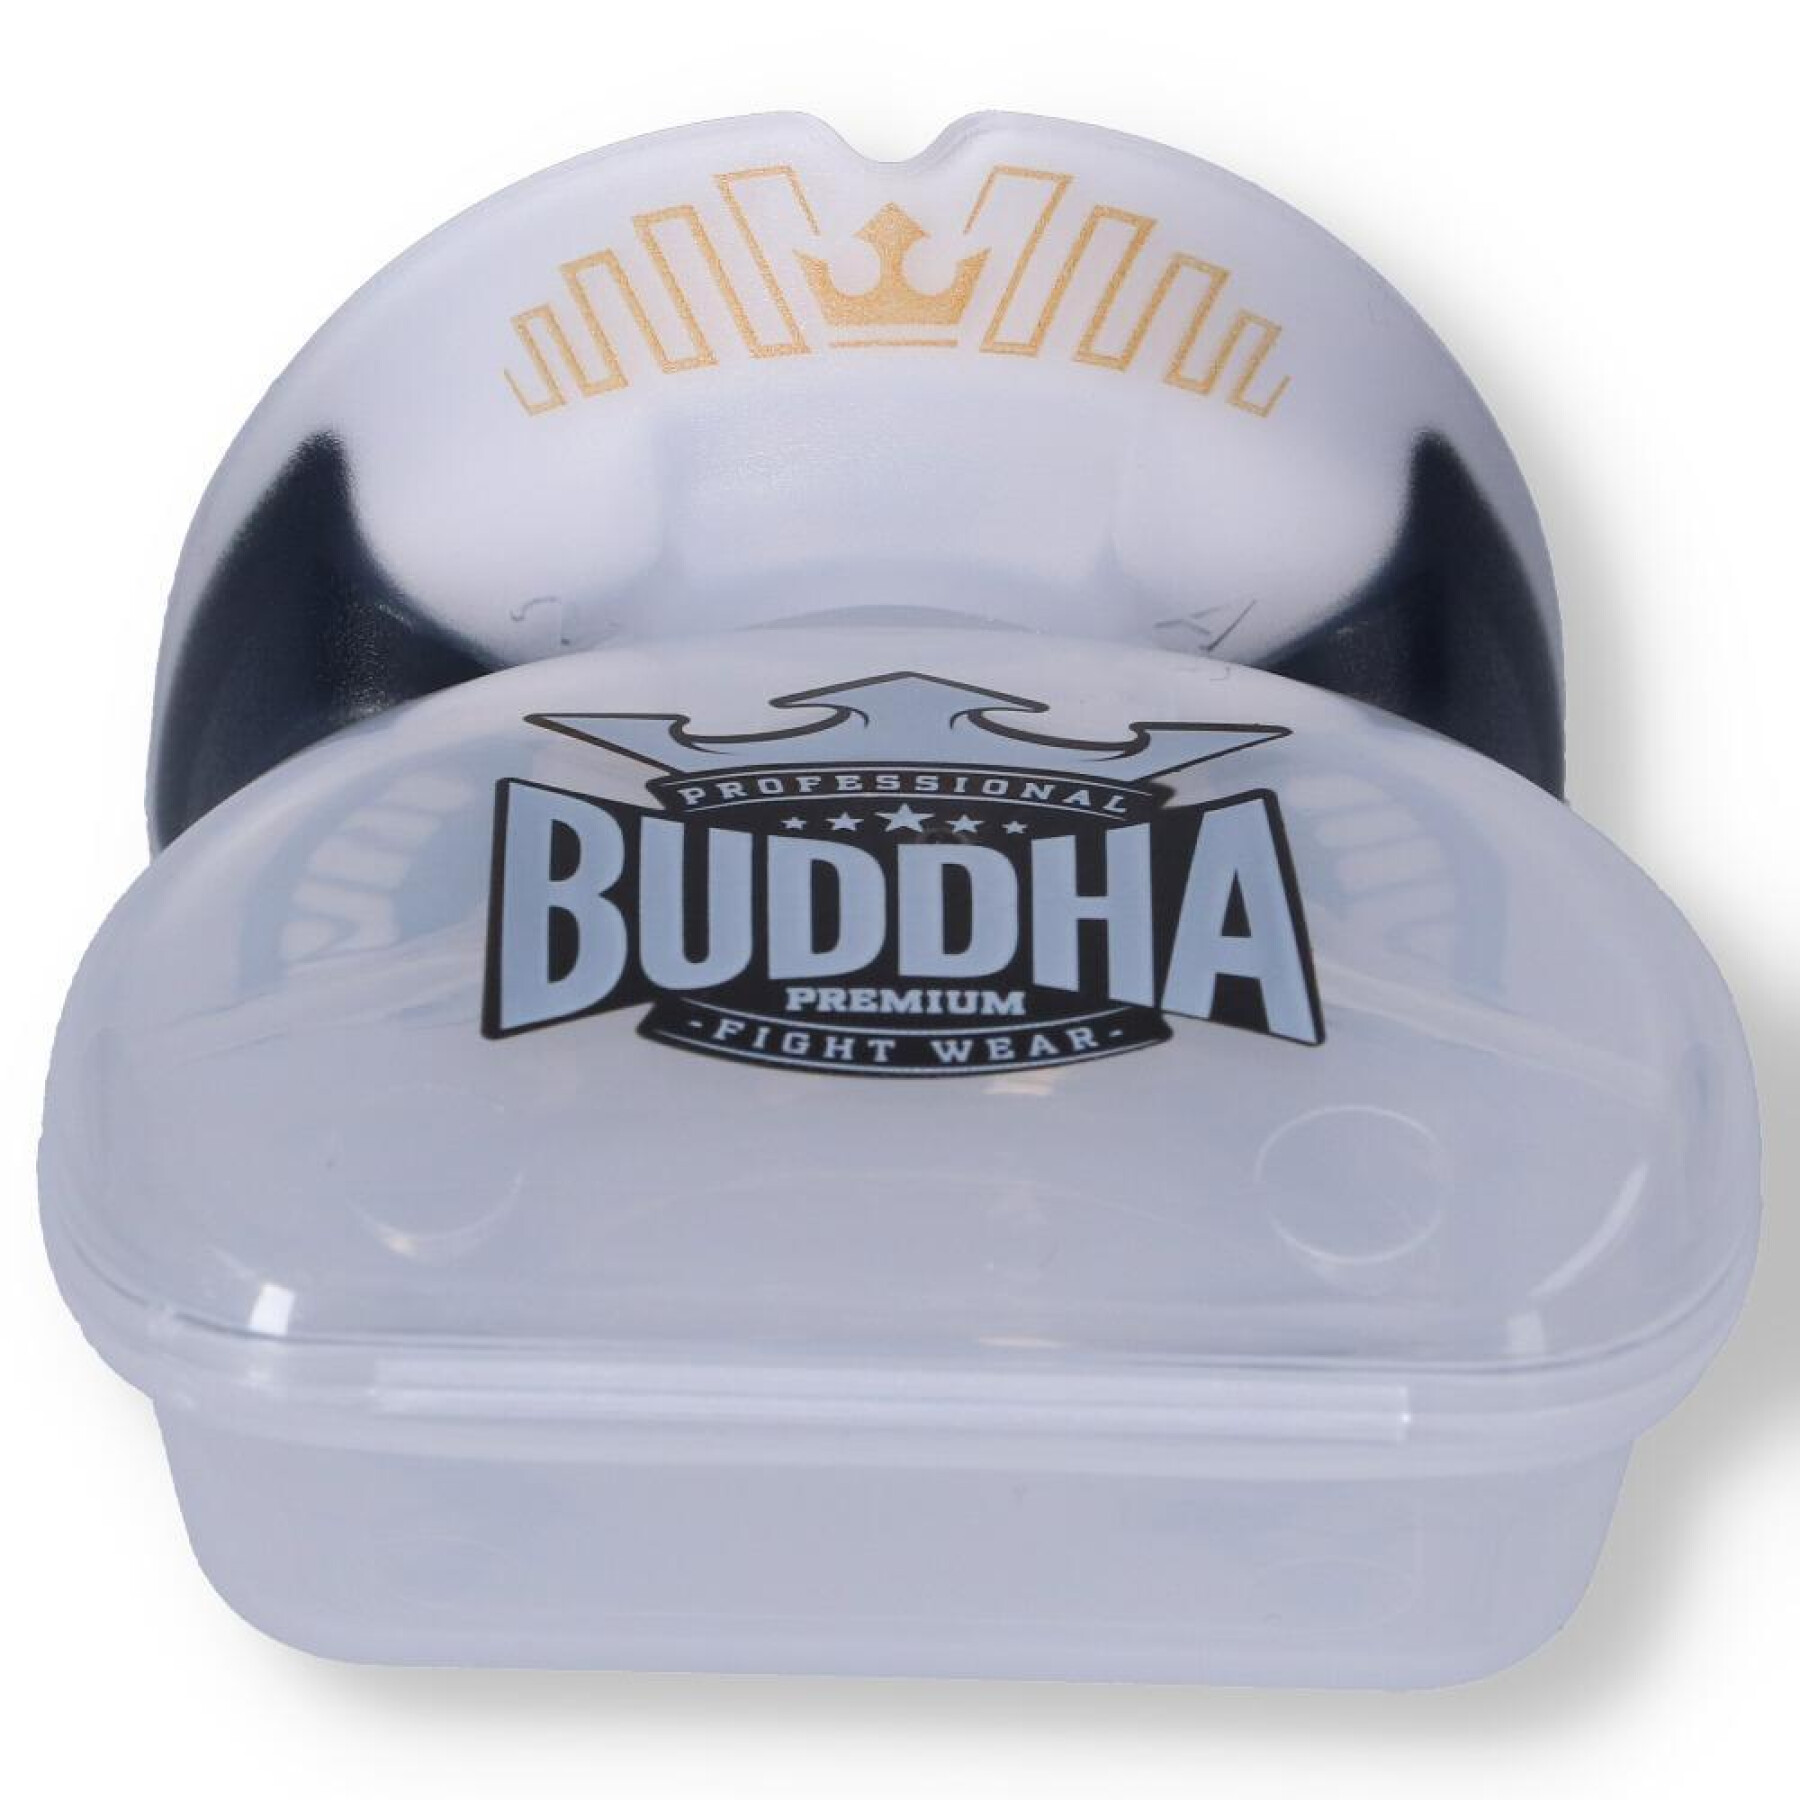 Protège-dents Buddha Fight Wear Premium